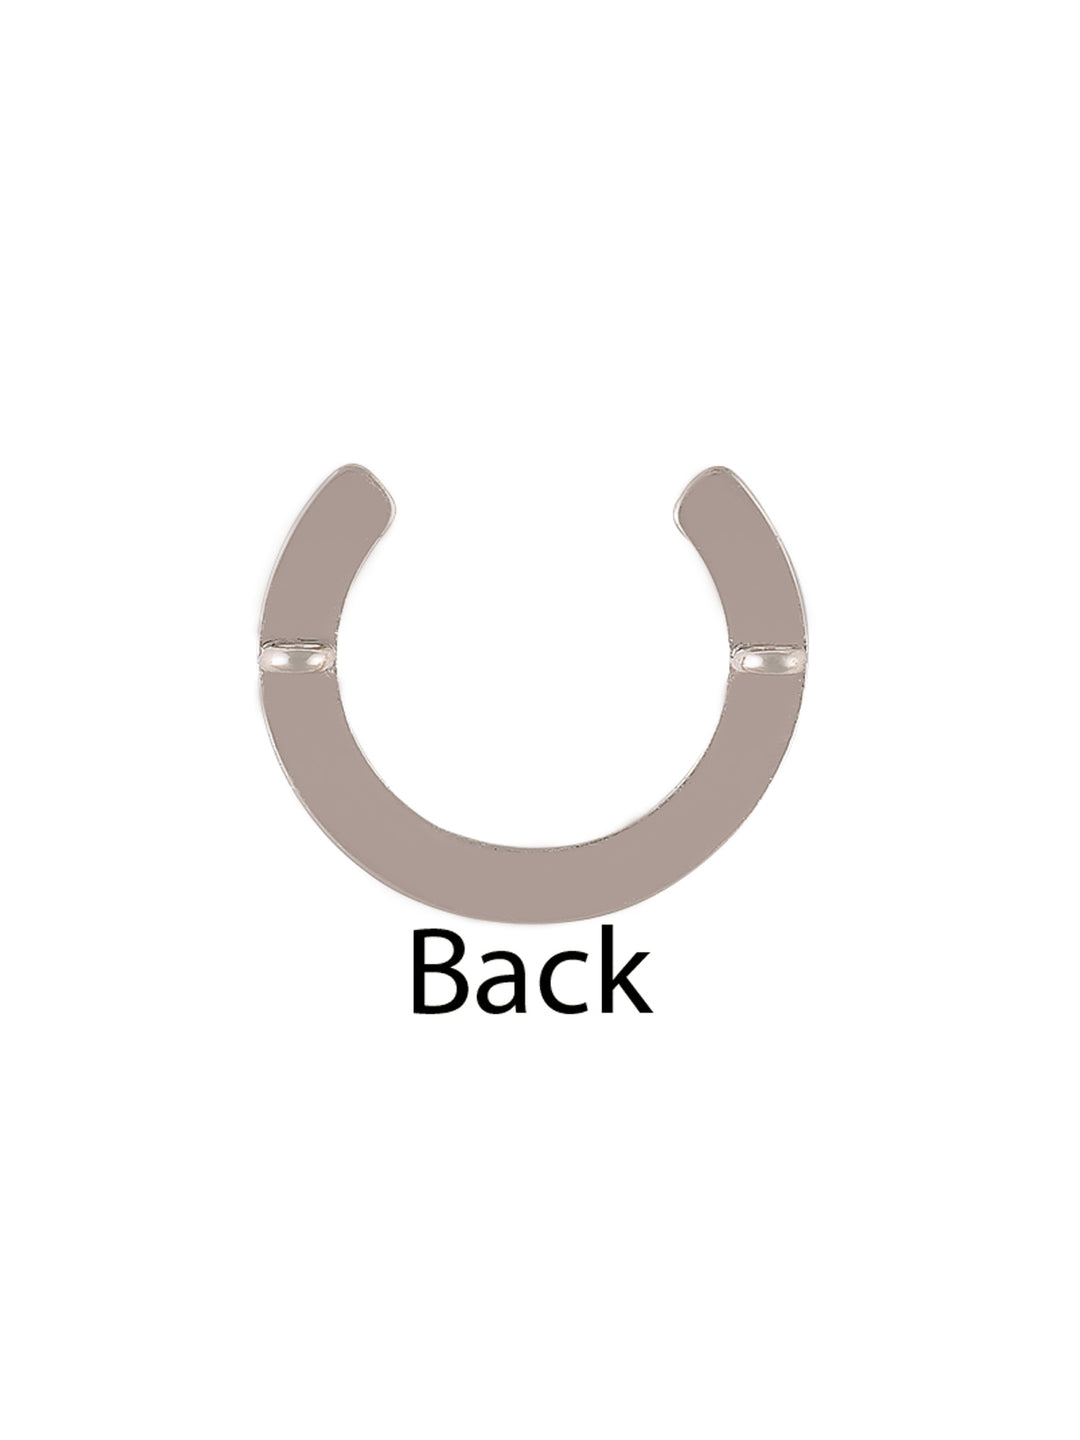 Horseshoe Shape Classic Half-Ring Button